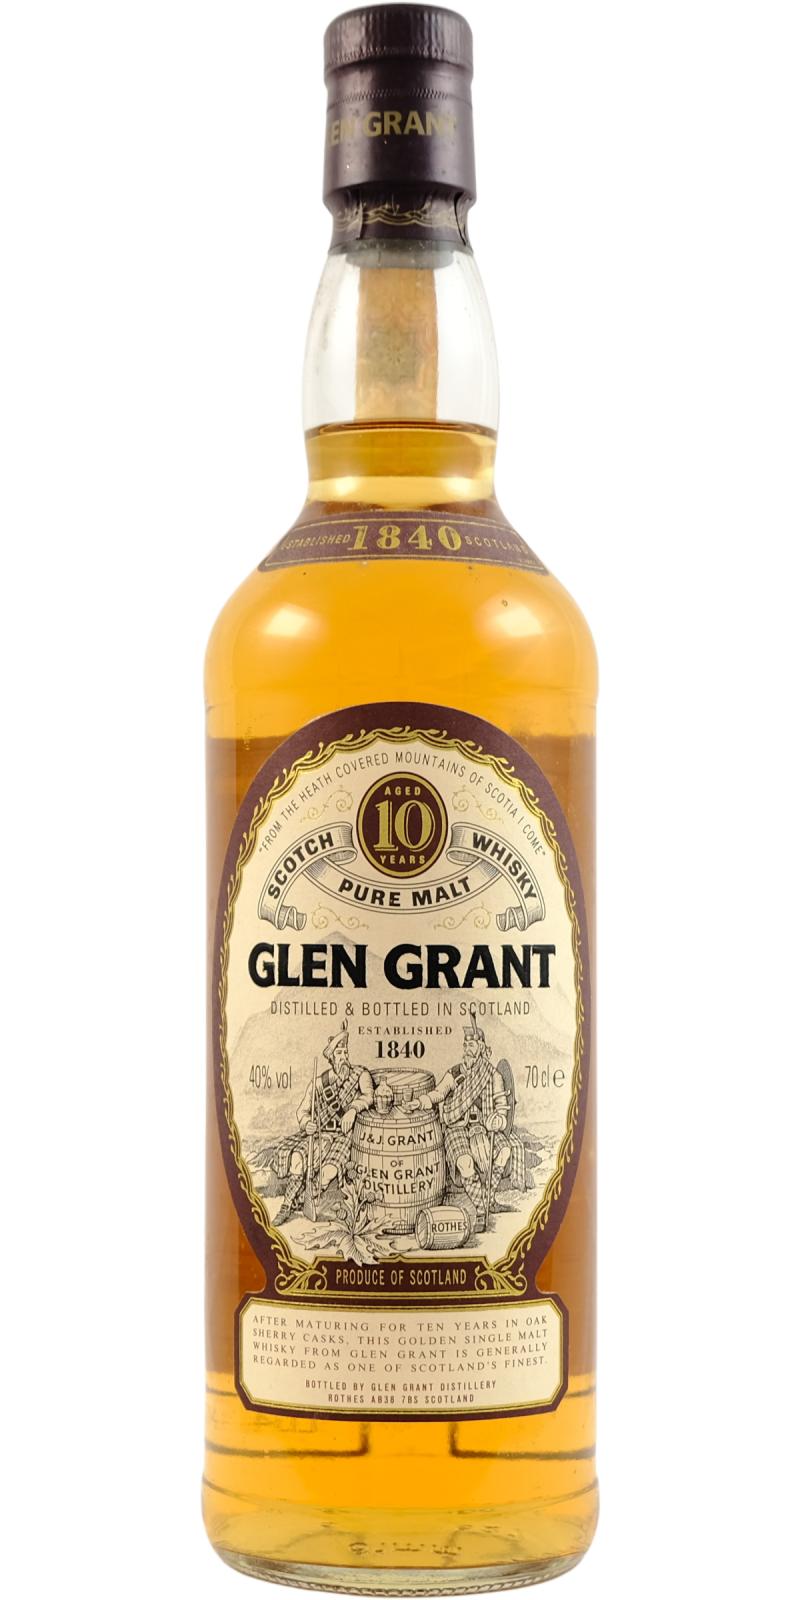 Glen Grant 10-year-old Pure Malt